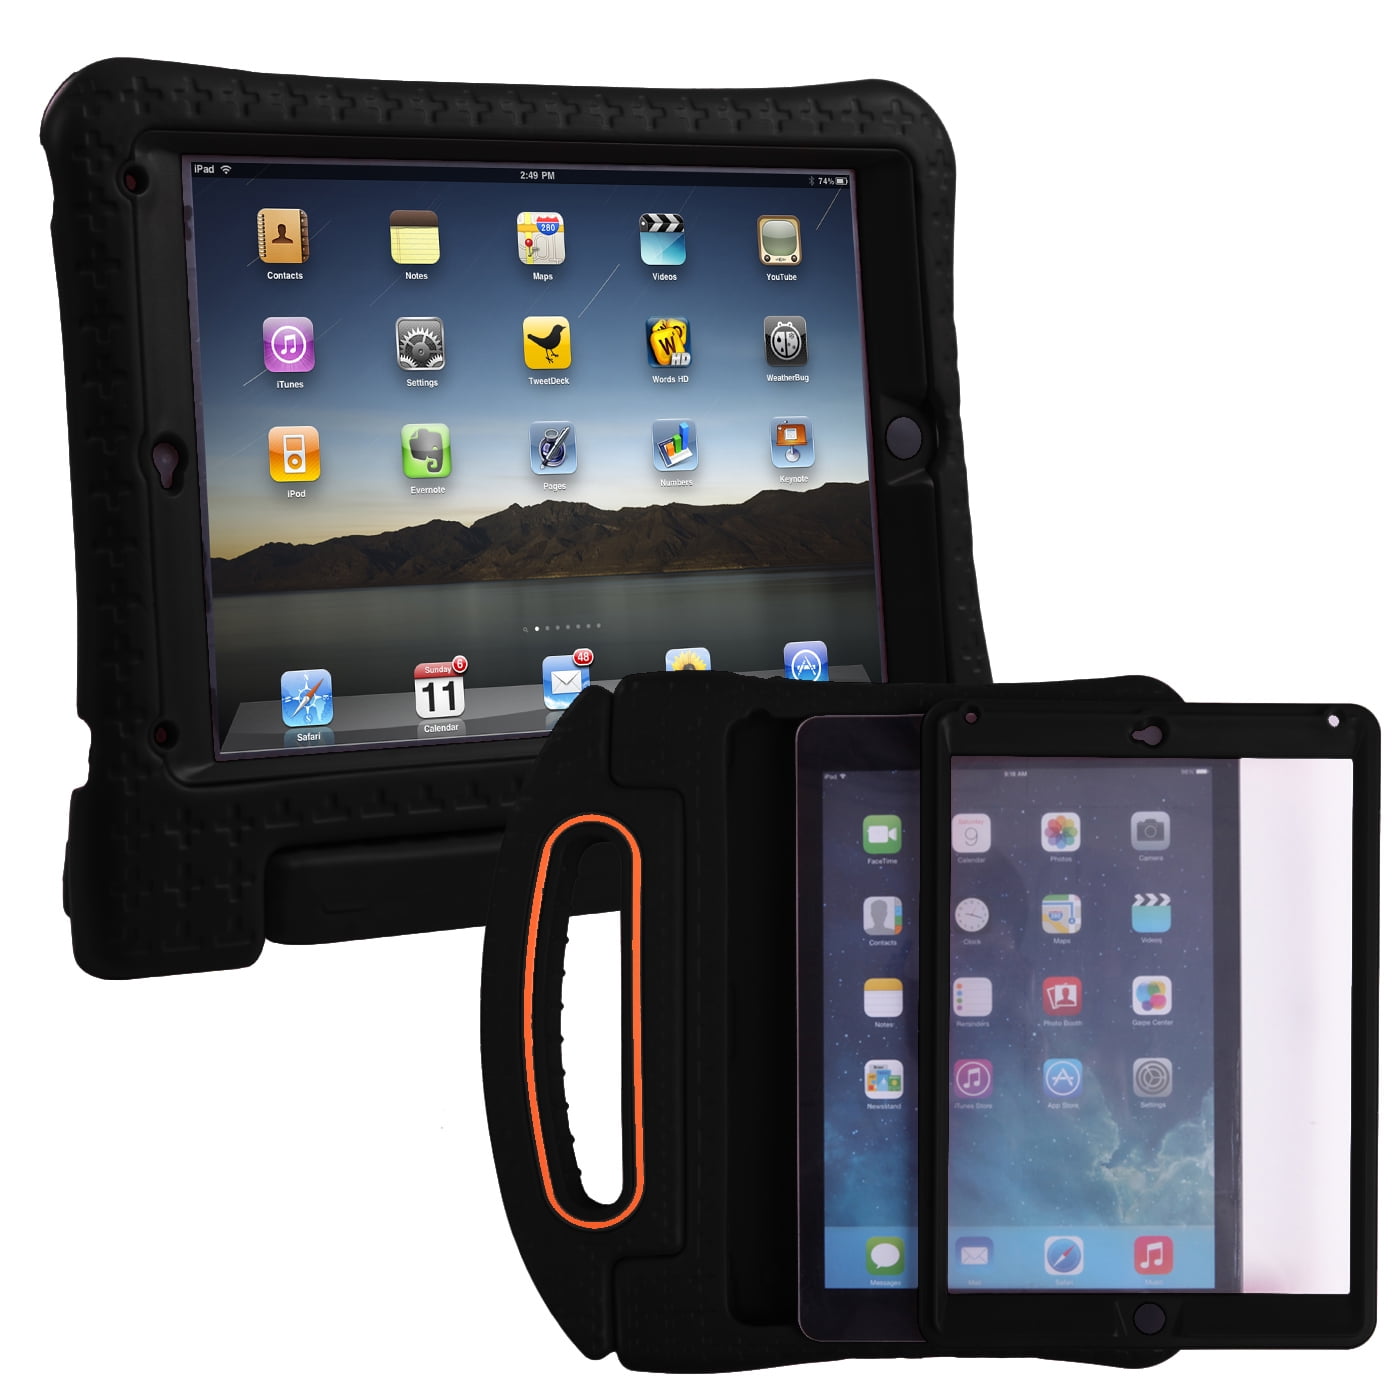 Uitdaging Groenten binnenvallen HDE iPad Air 2 Bumper Case for Kids Shockproof Hard Cover Handle Stand with  Built in Screen Protector for Apple iPad Air 2 (Black) - Walmart.com